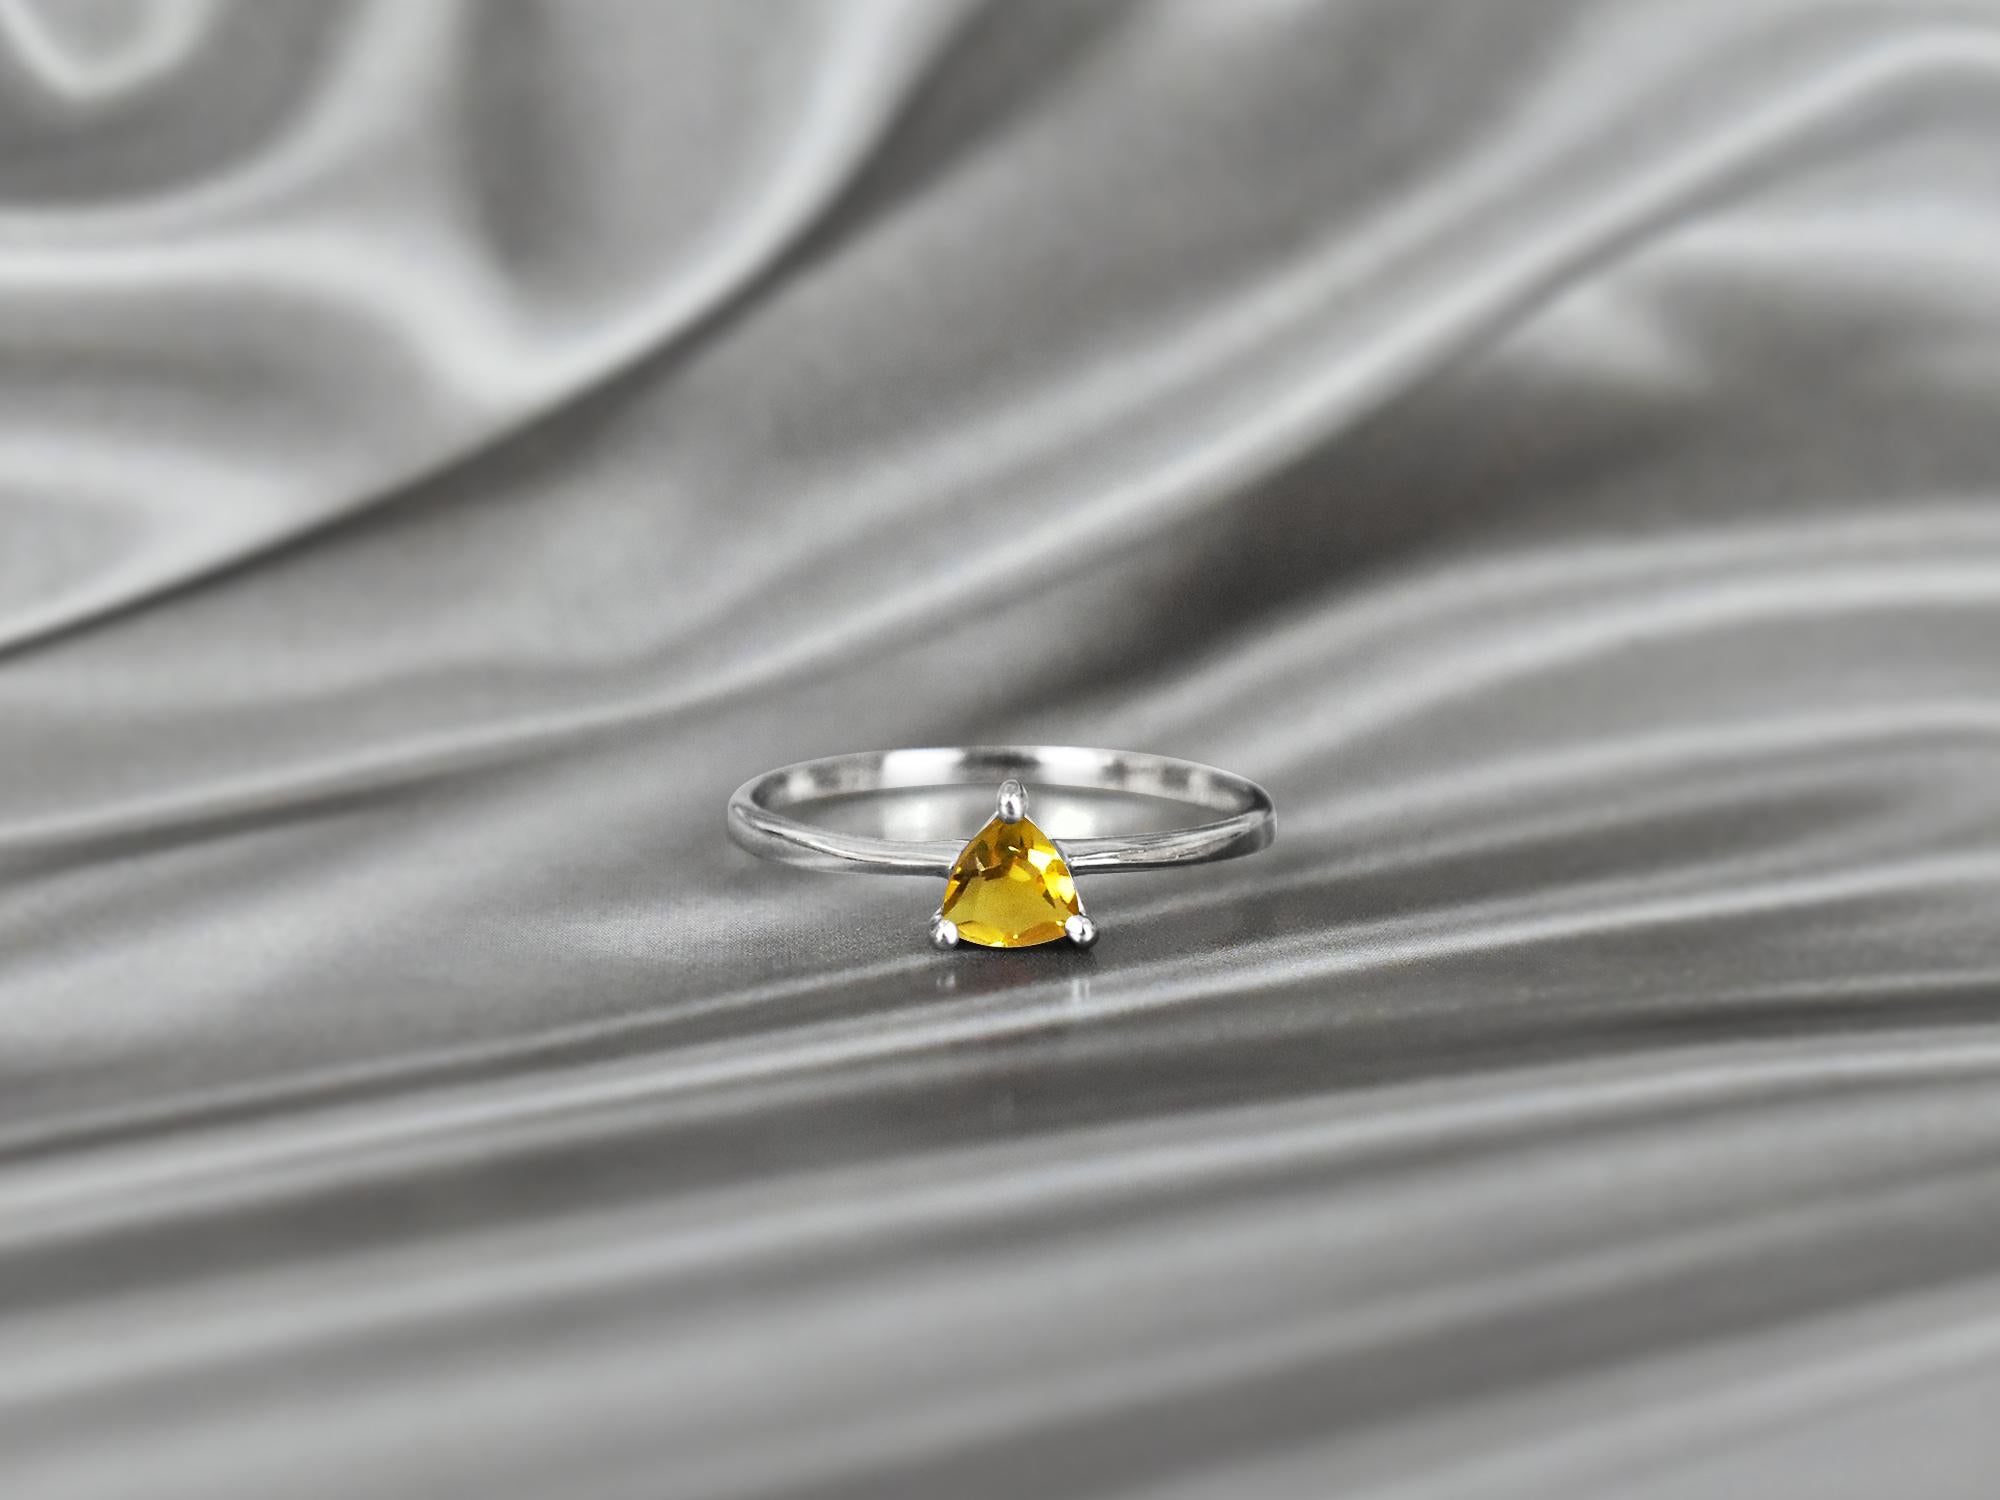 For Sale:  10k Gold Trillion Gemstone 6 mm Trillion Gemstone Engagement Ring Stackable Ring 6